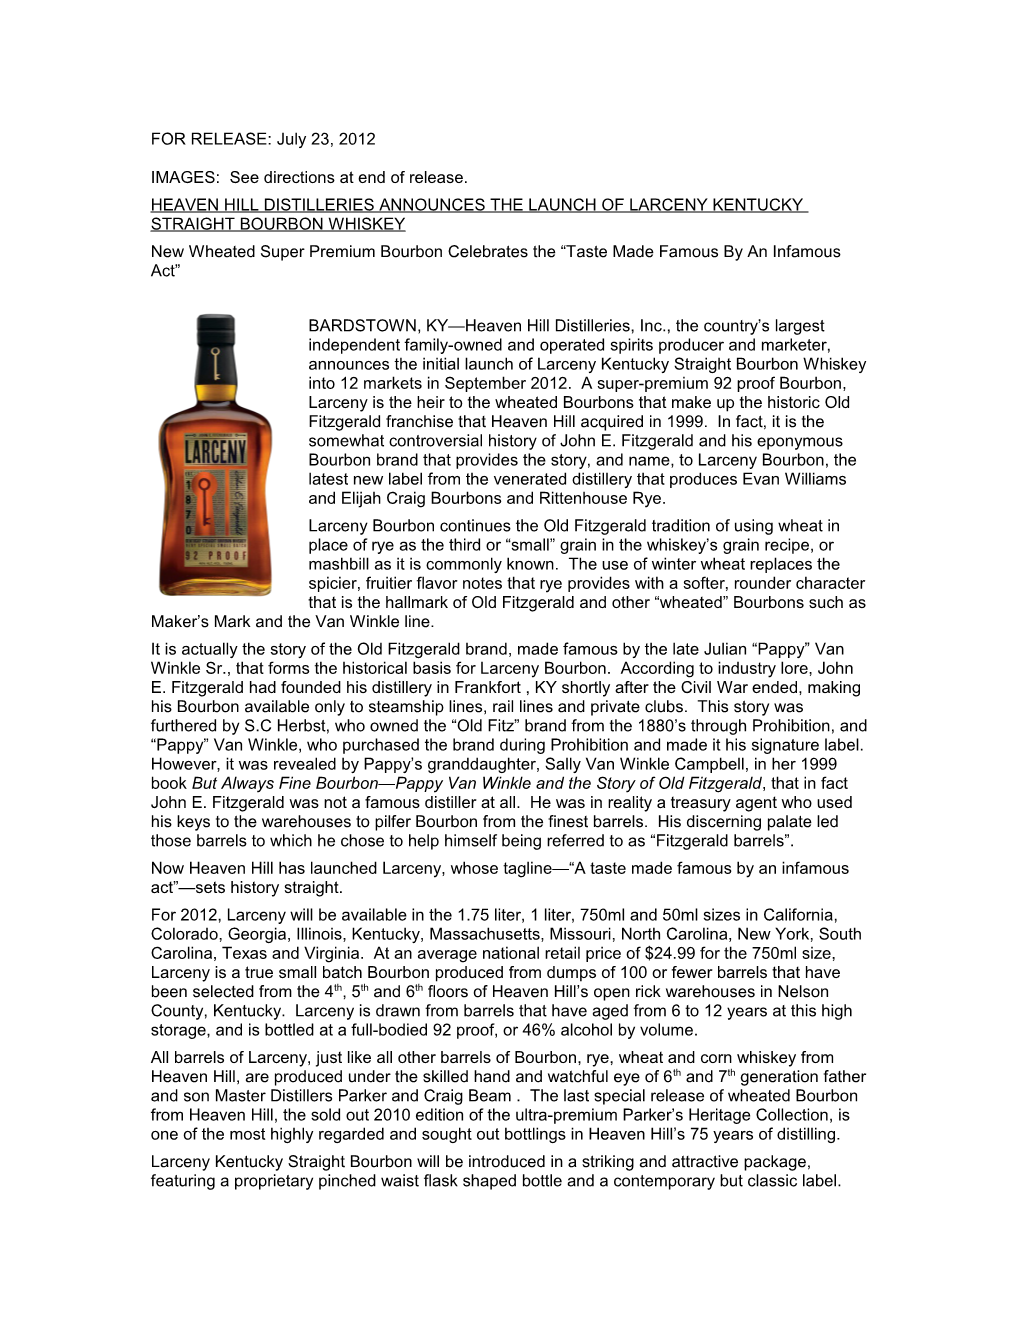 Heaven Hill Distilleries Announces the Launch of Larceny Kentucky Straight Bourbon Whiskey